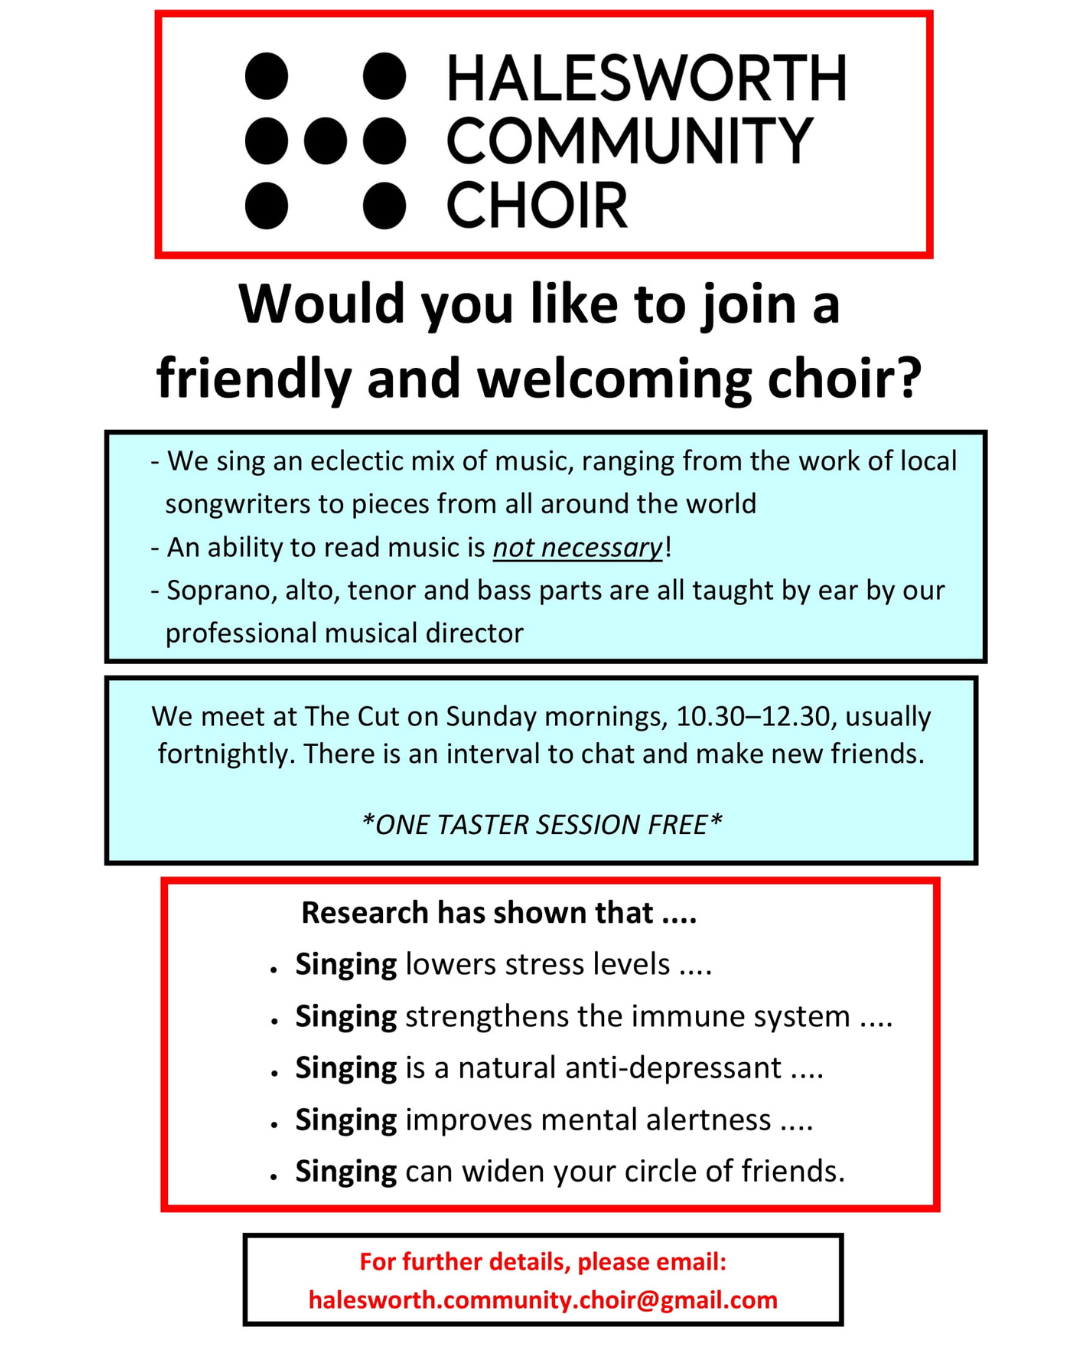 Halesworth Community Choir